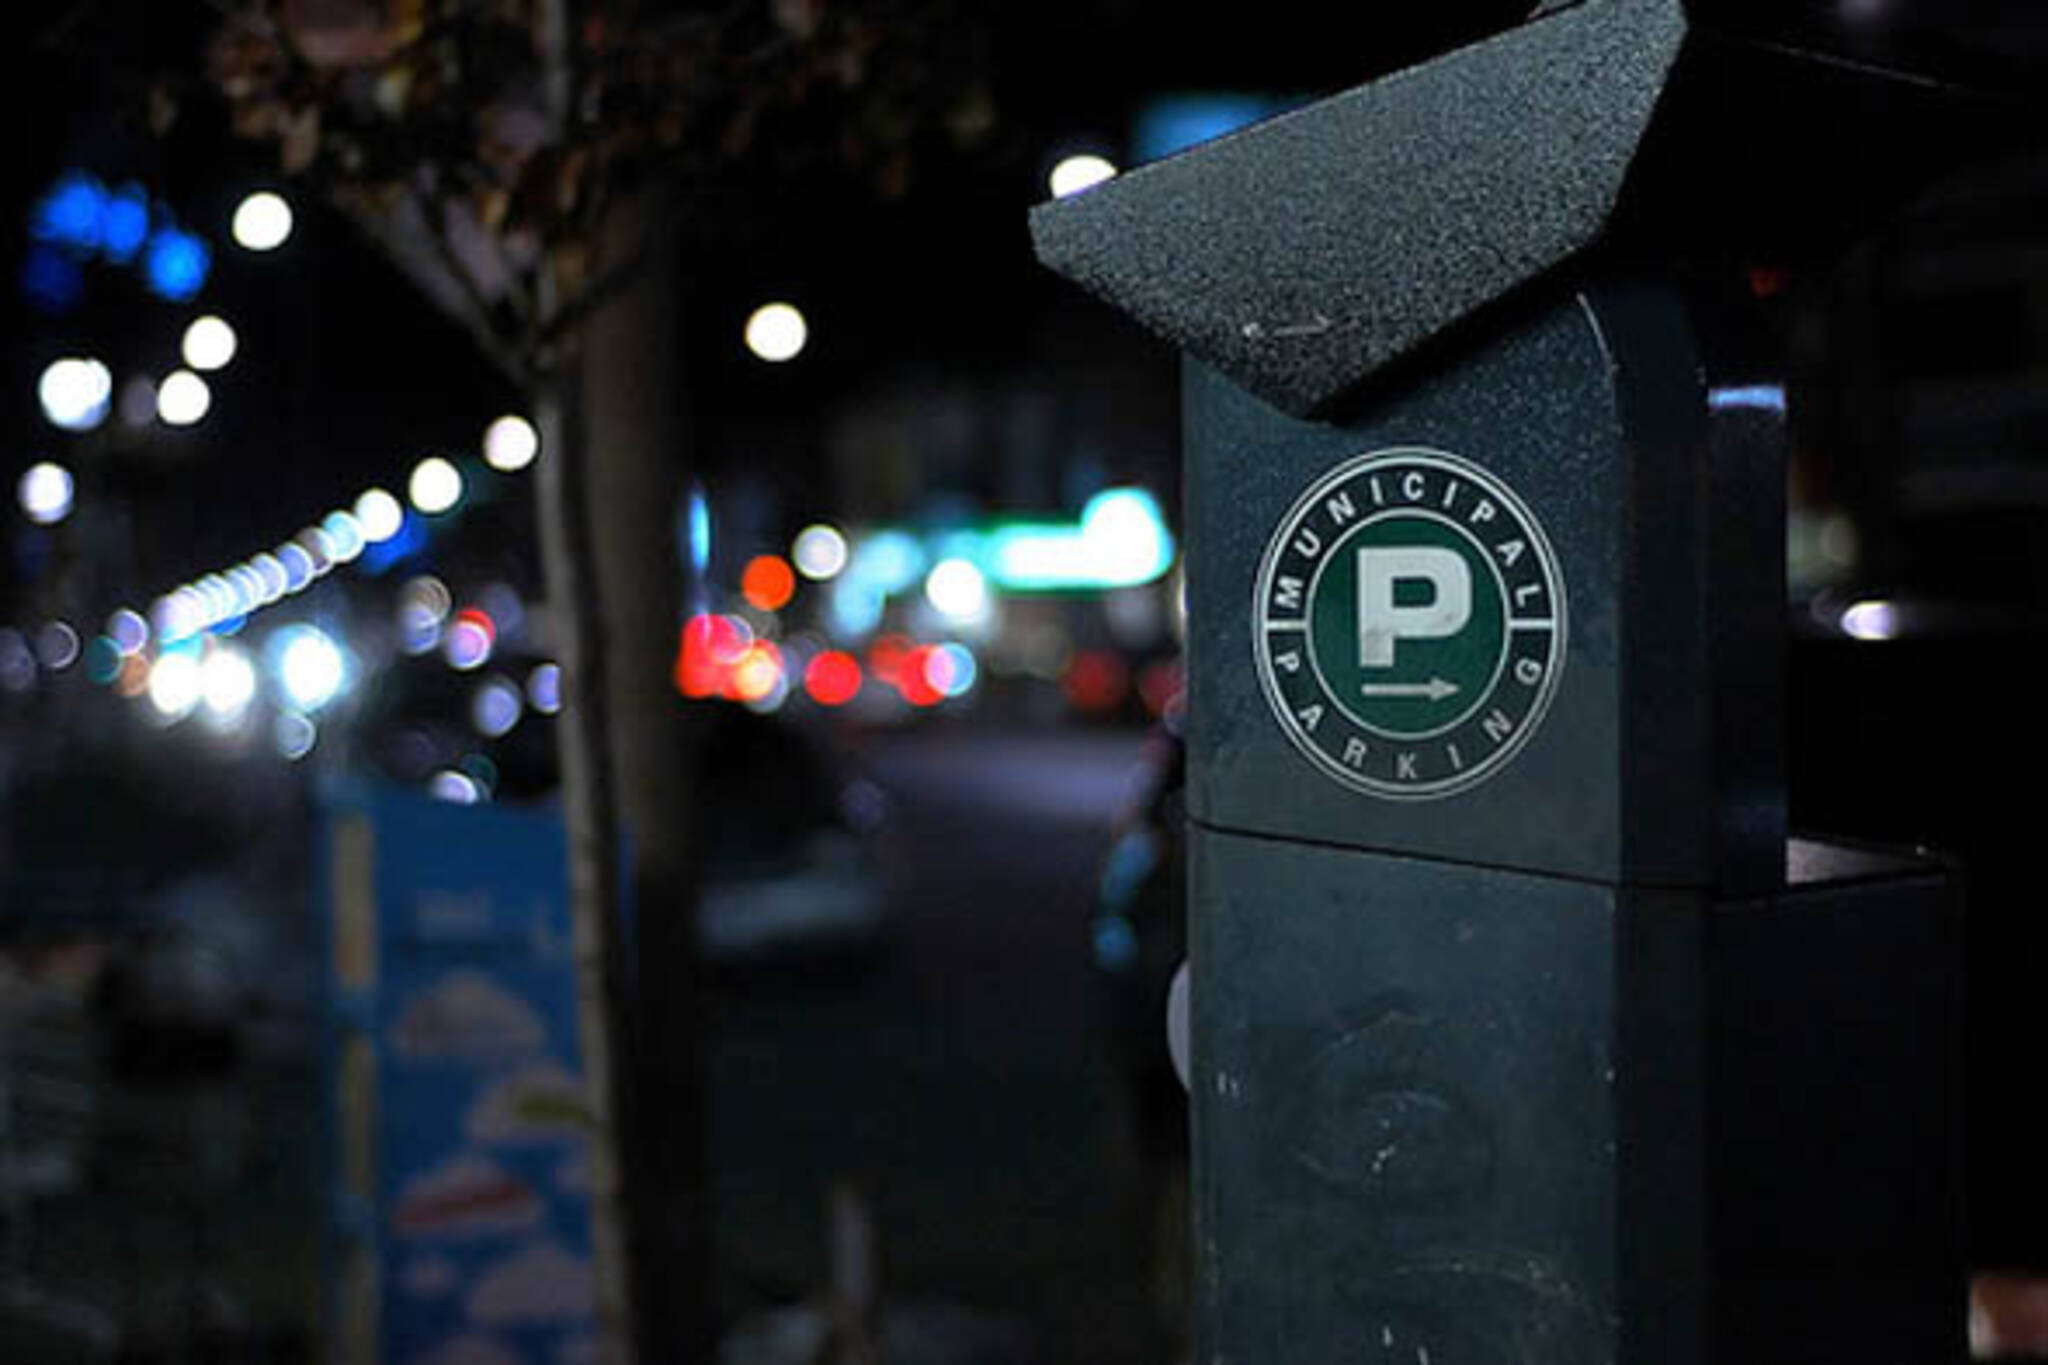 Green P parking web site toronto